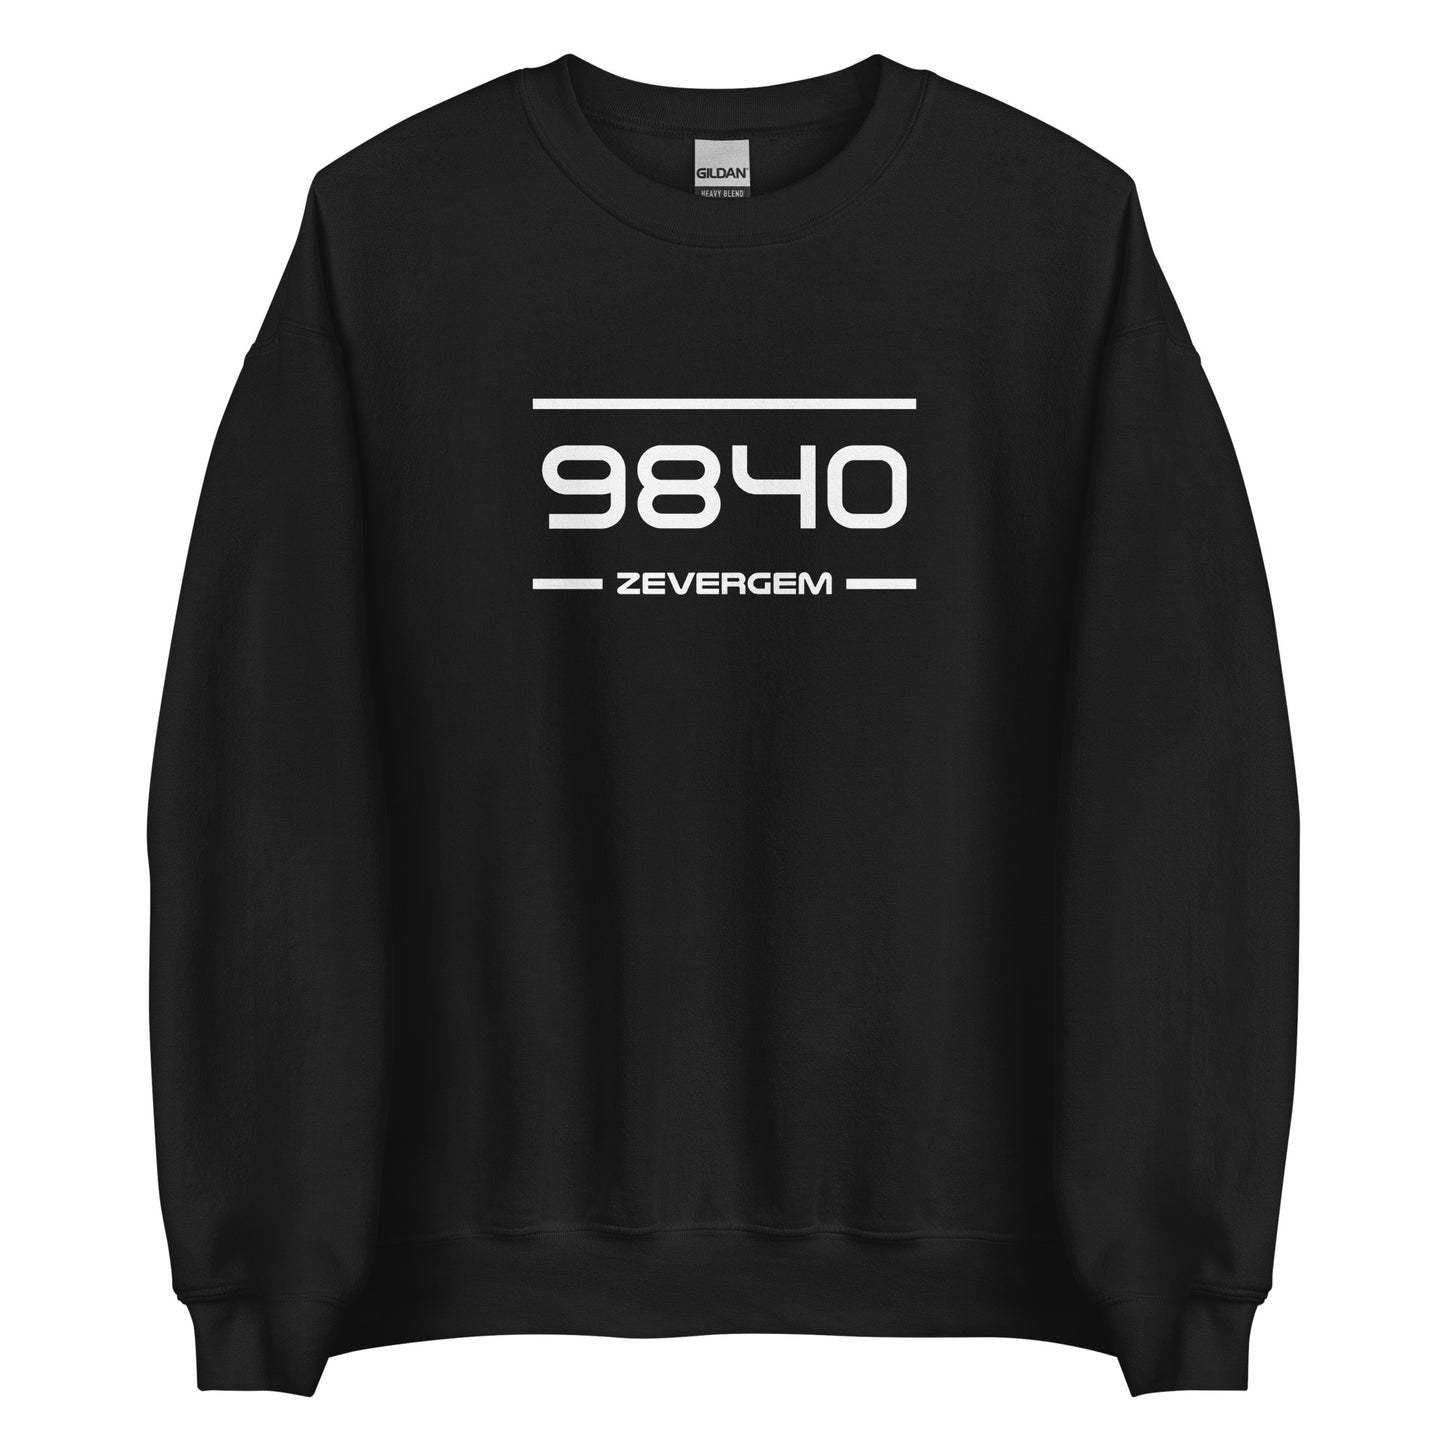 Sweater - 9840 - Zevergem (M/V)